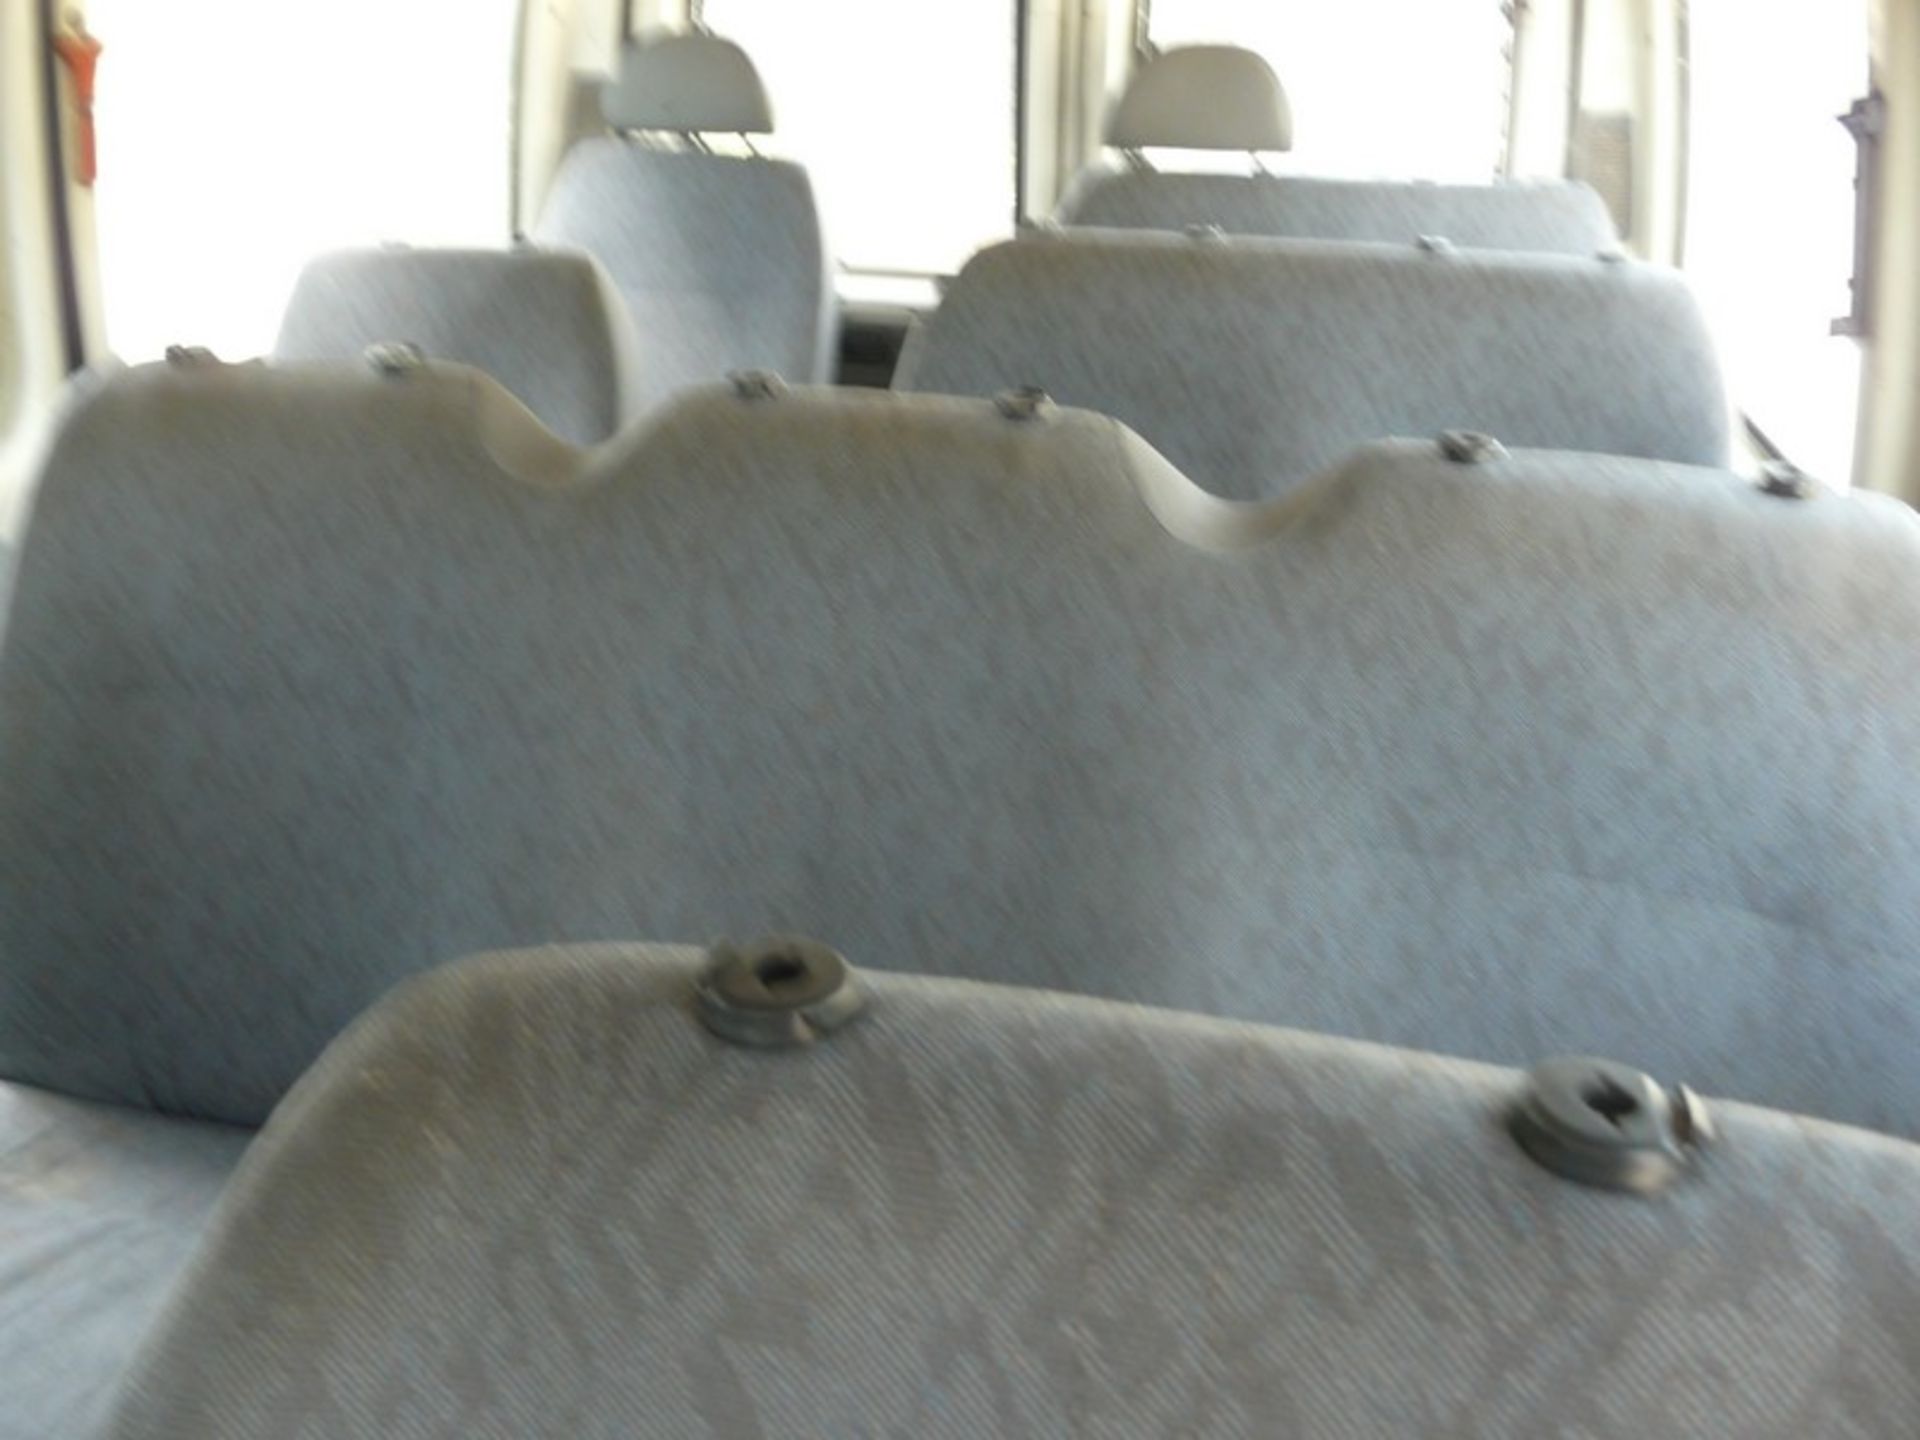 FORD TRANSIT, buss115, diesel, KM 146159, 11 seats, REG NEE 7504, Year: 1997 (Located in Greece - - Bild 7 aus 9